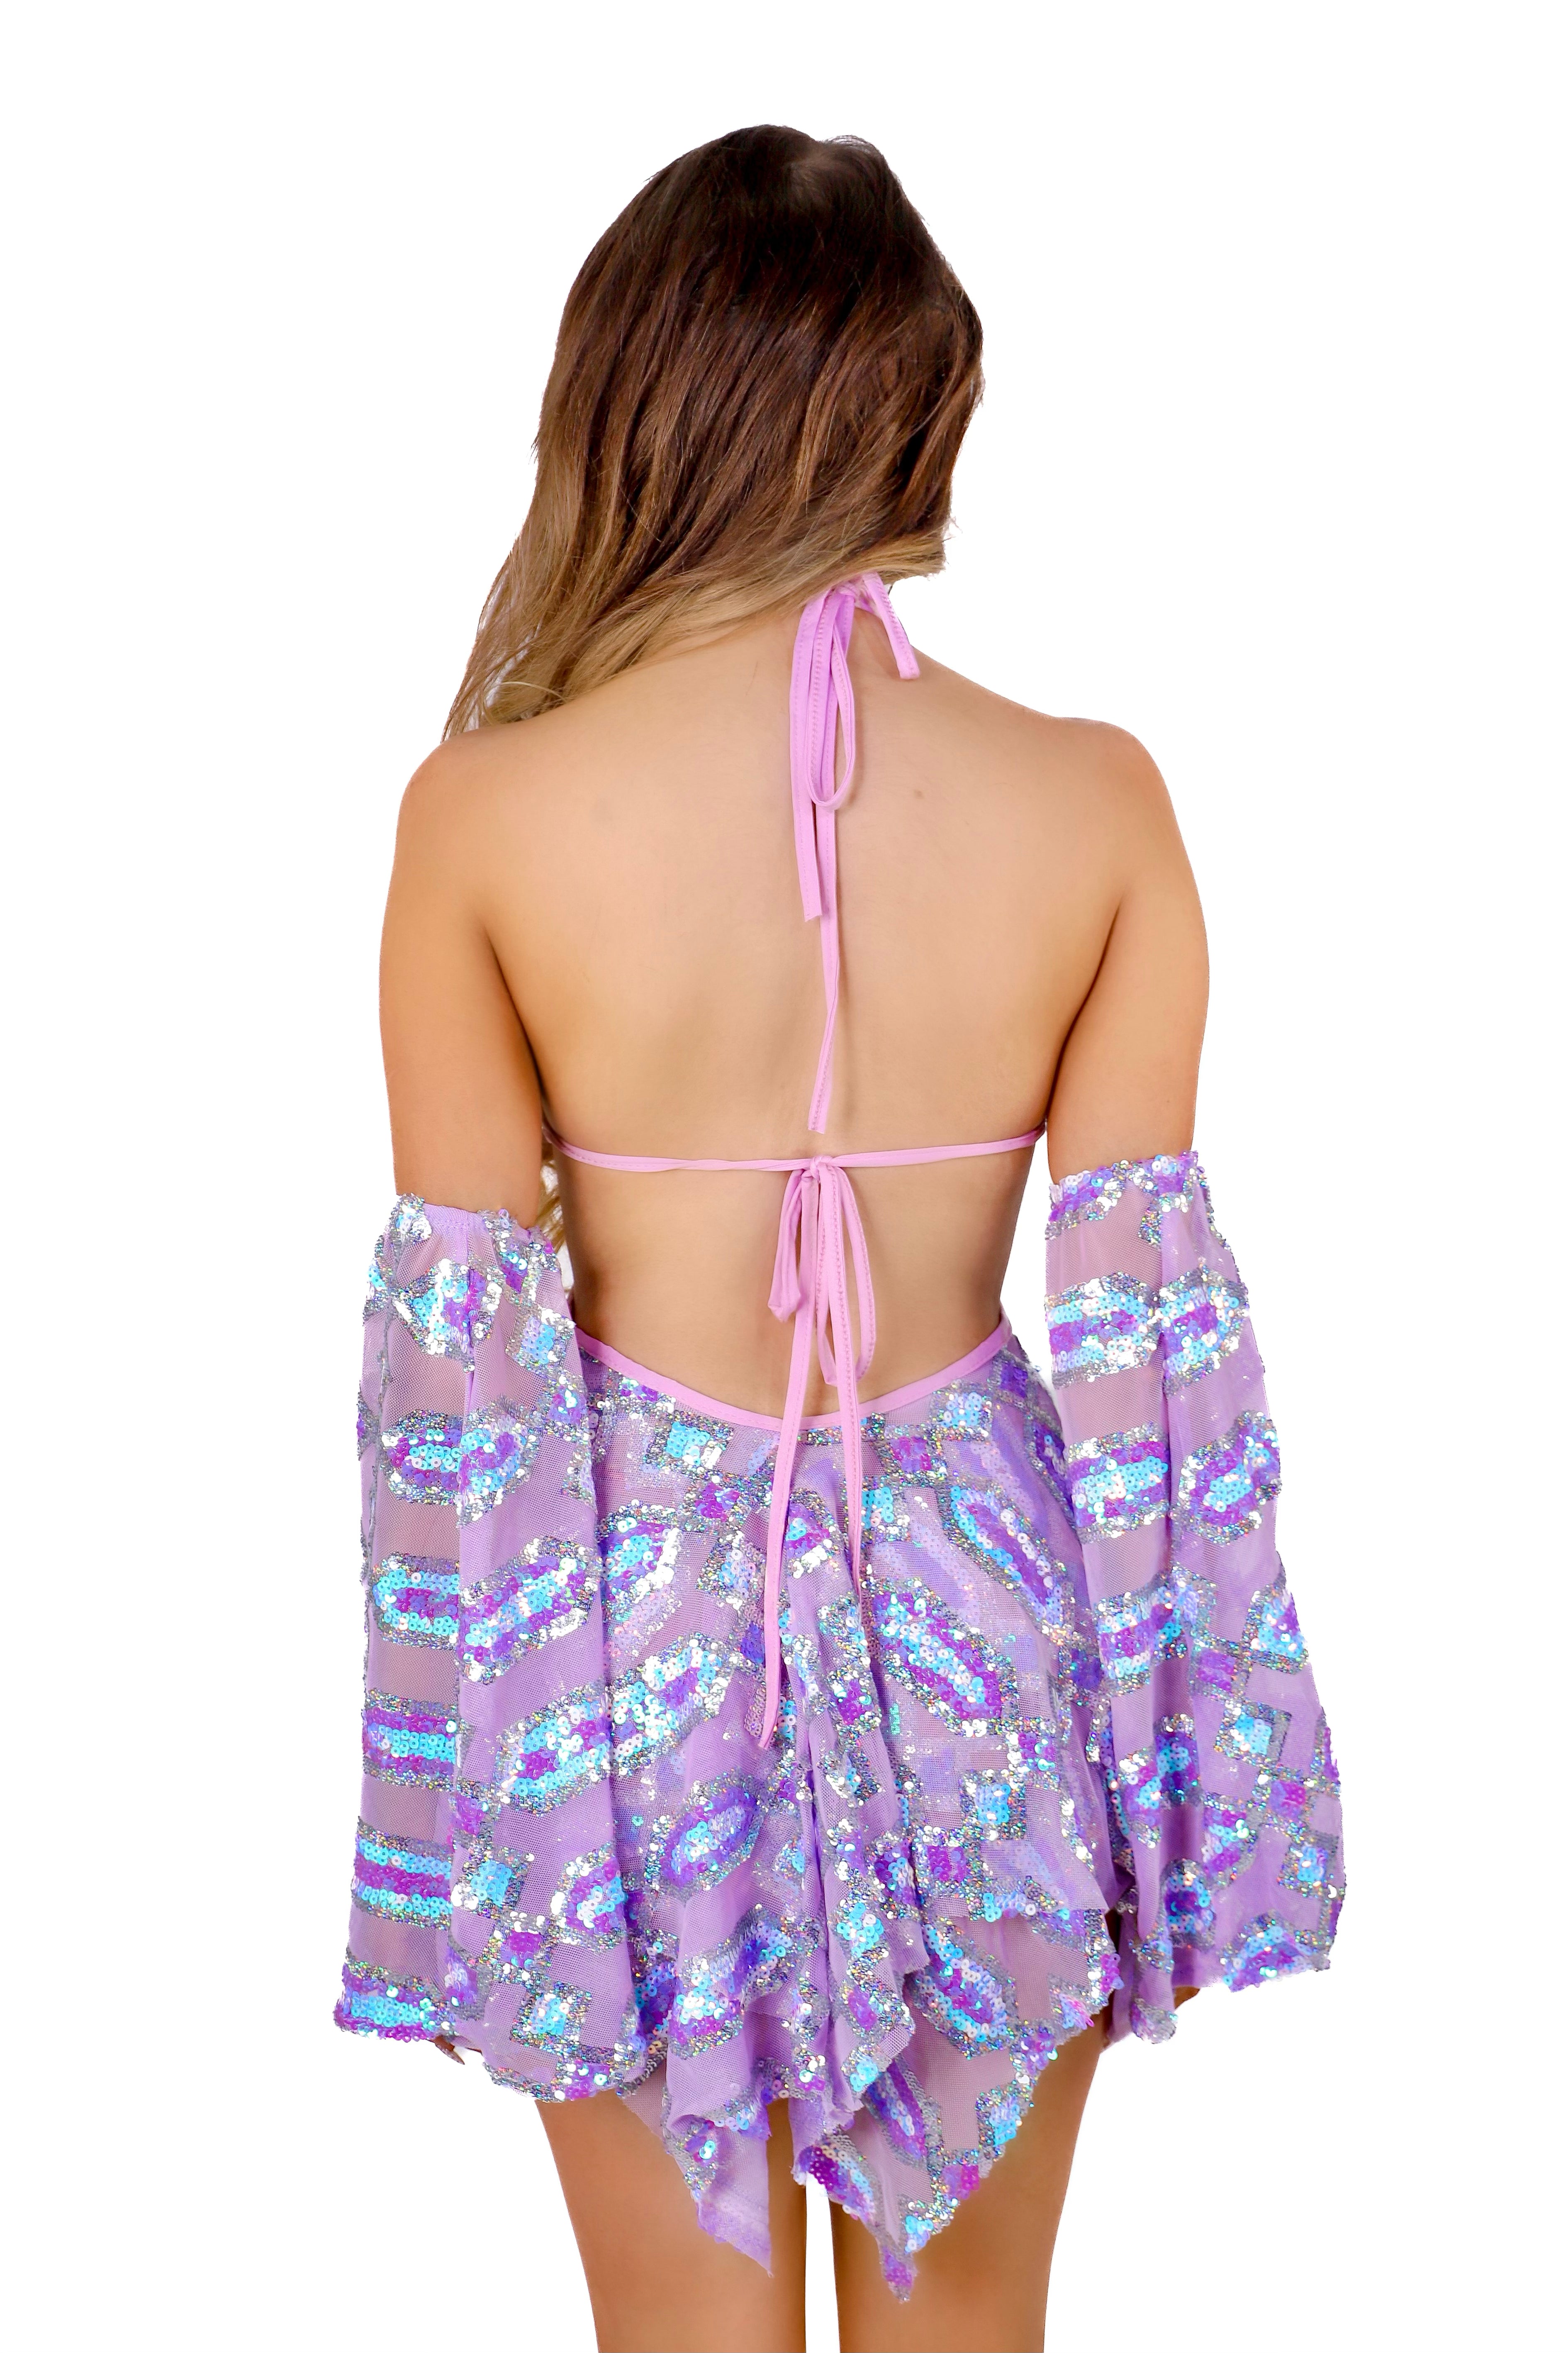 FULL OUTFIT- Lavender Sequin Goddess Dress (2 pcs)